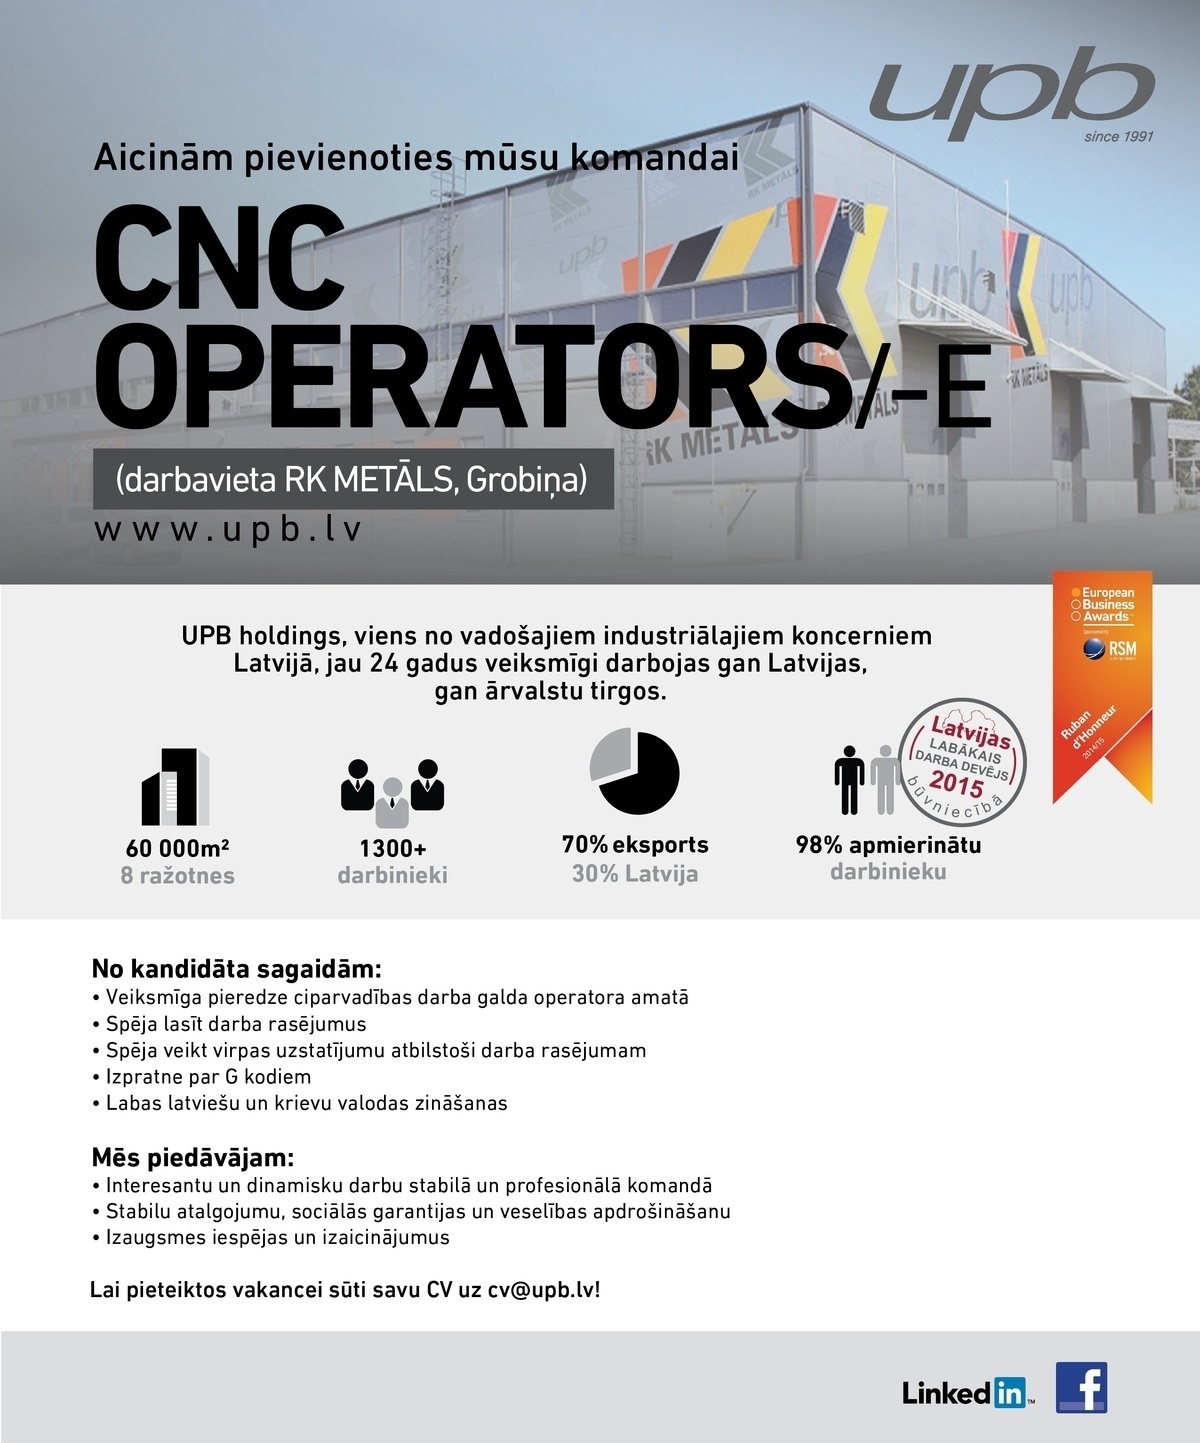 UPB, AS CNC OPERATORS/-E